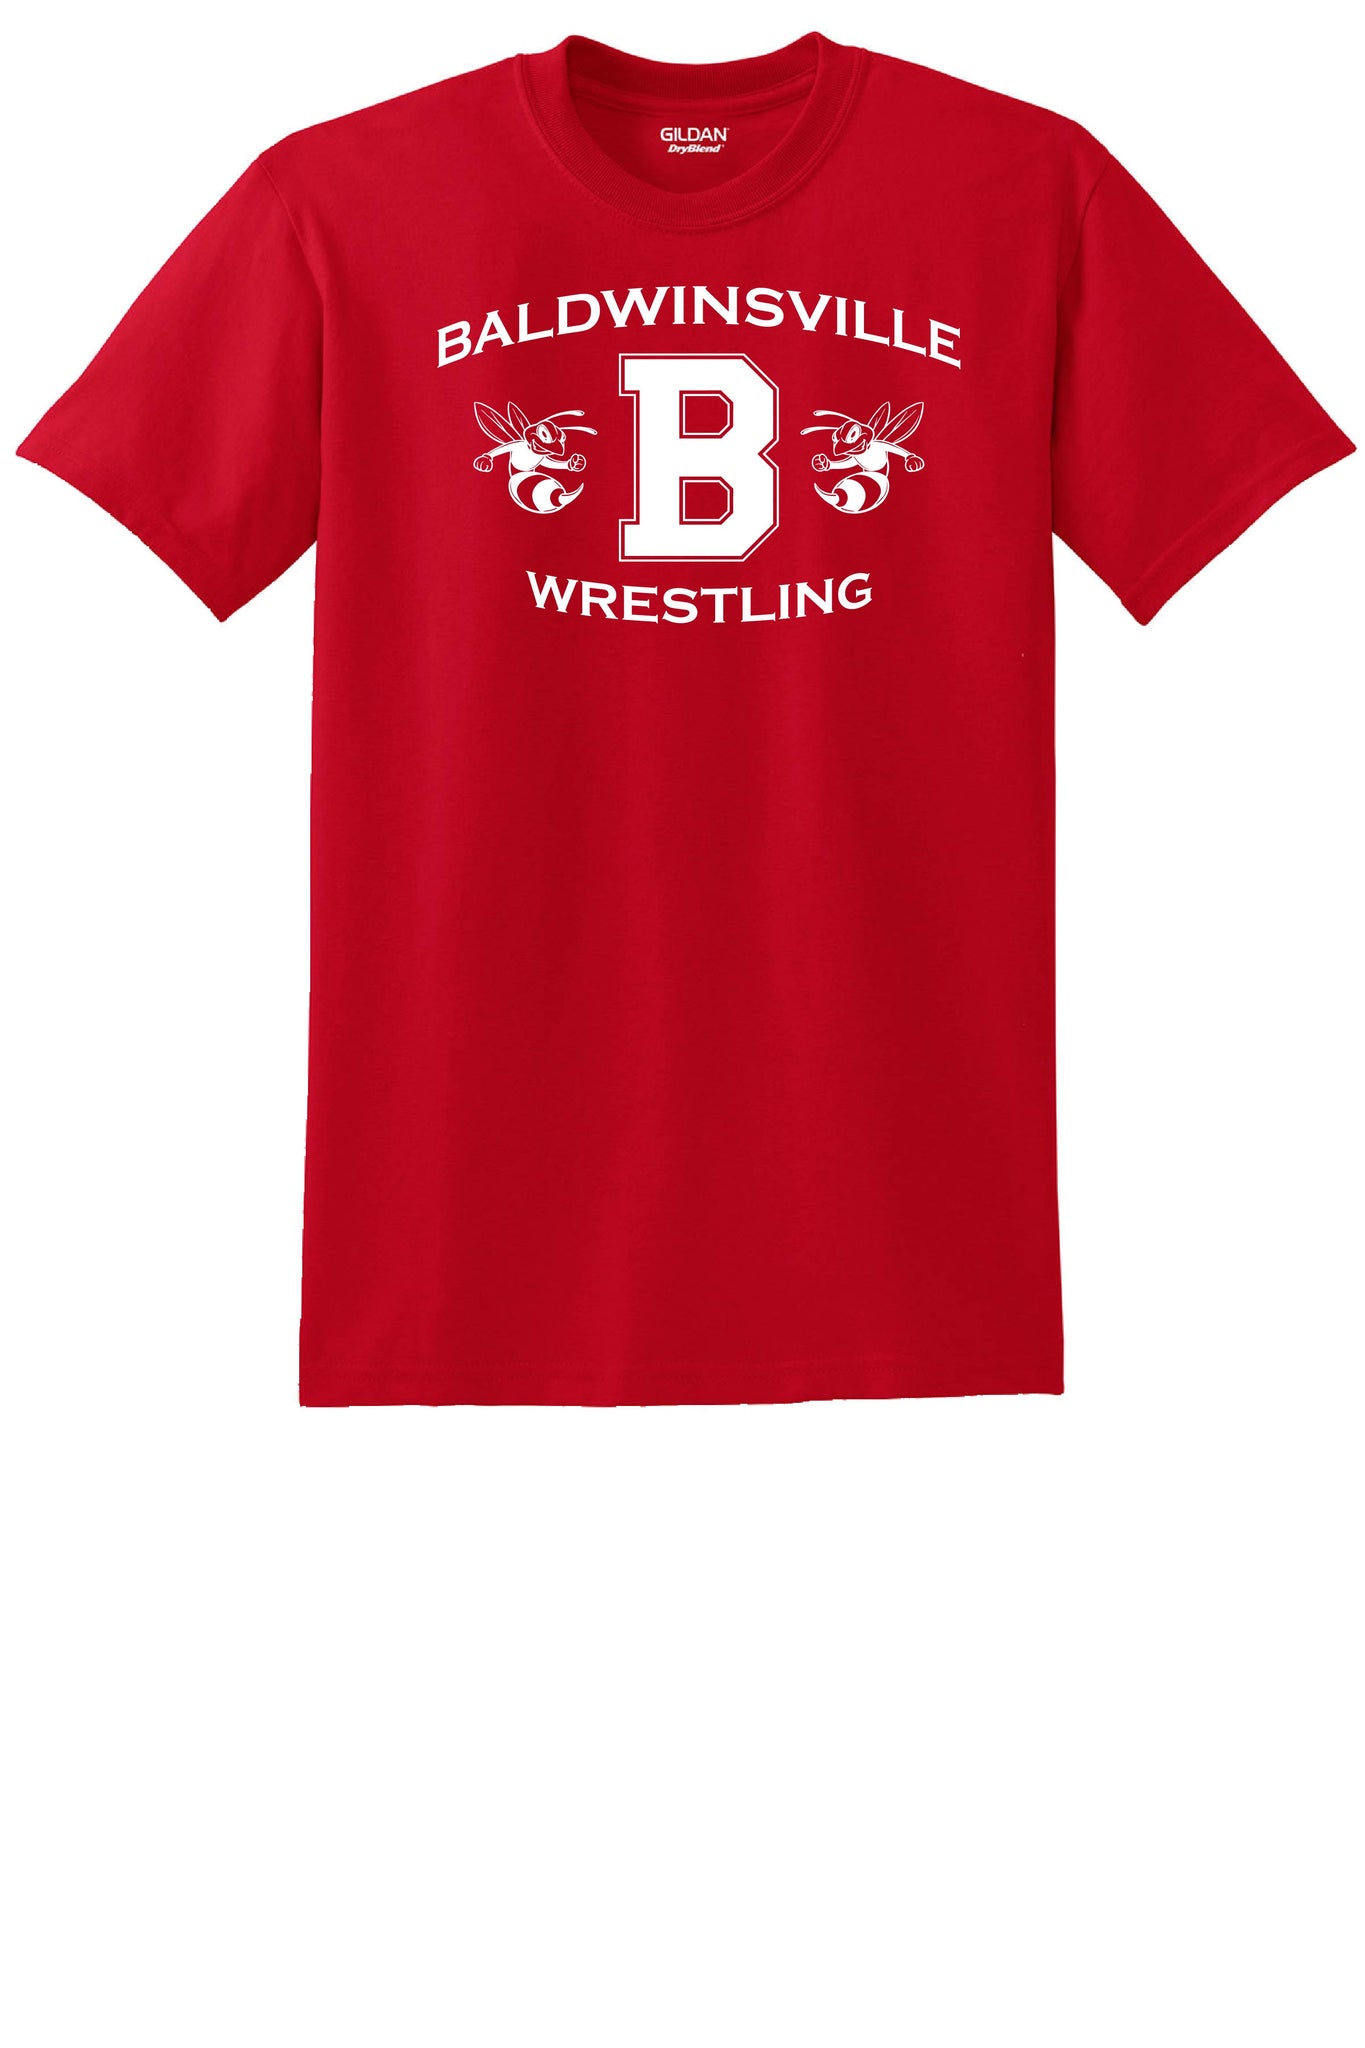 Gildan Short Sleeve T-Shirt - Baldwinsville Wrestling - Red